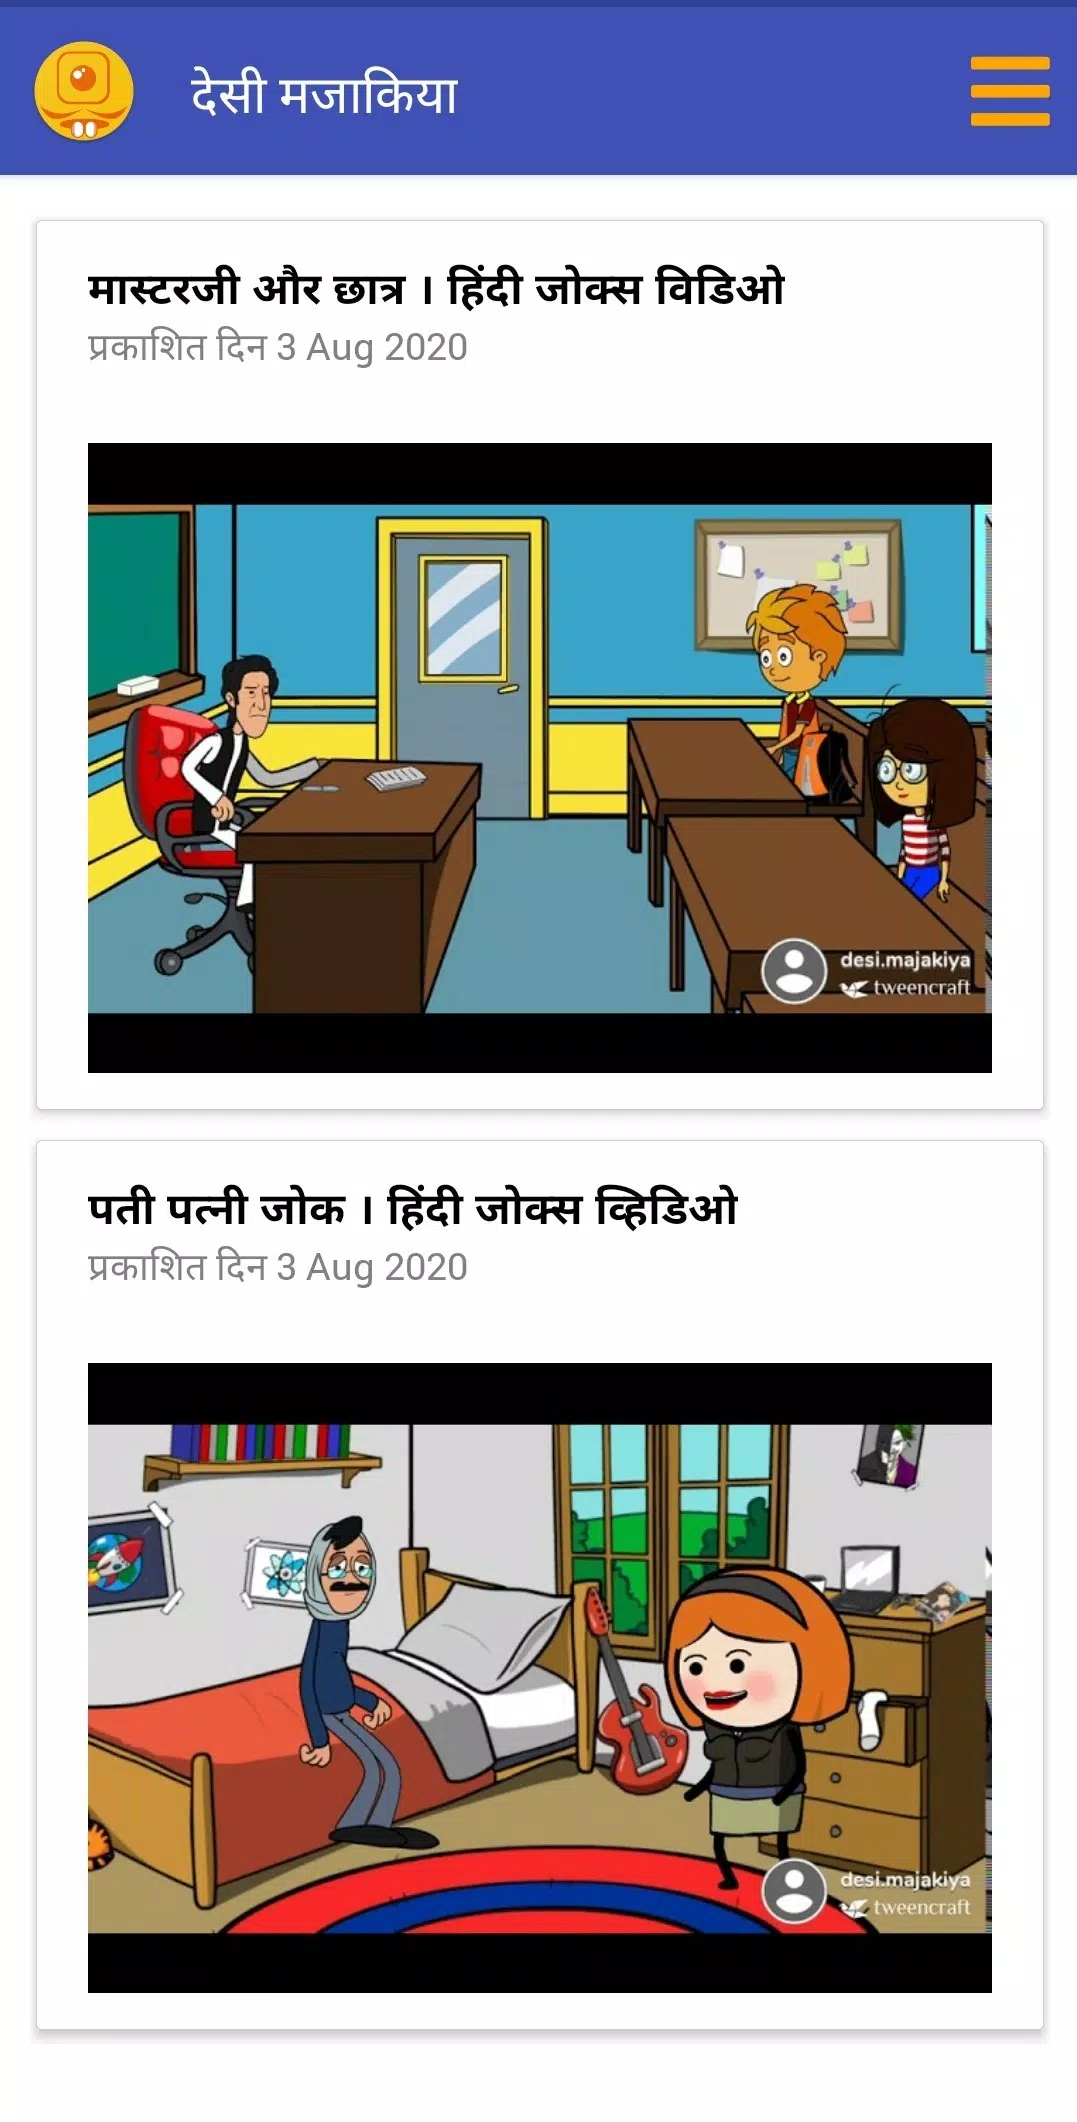 Desi Majakiya - Hindi Funny Jokes Videos APK for Android Download